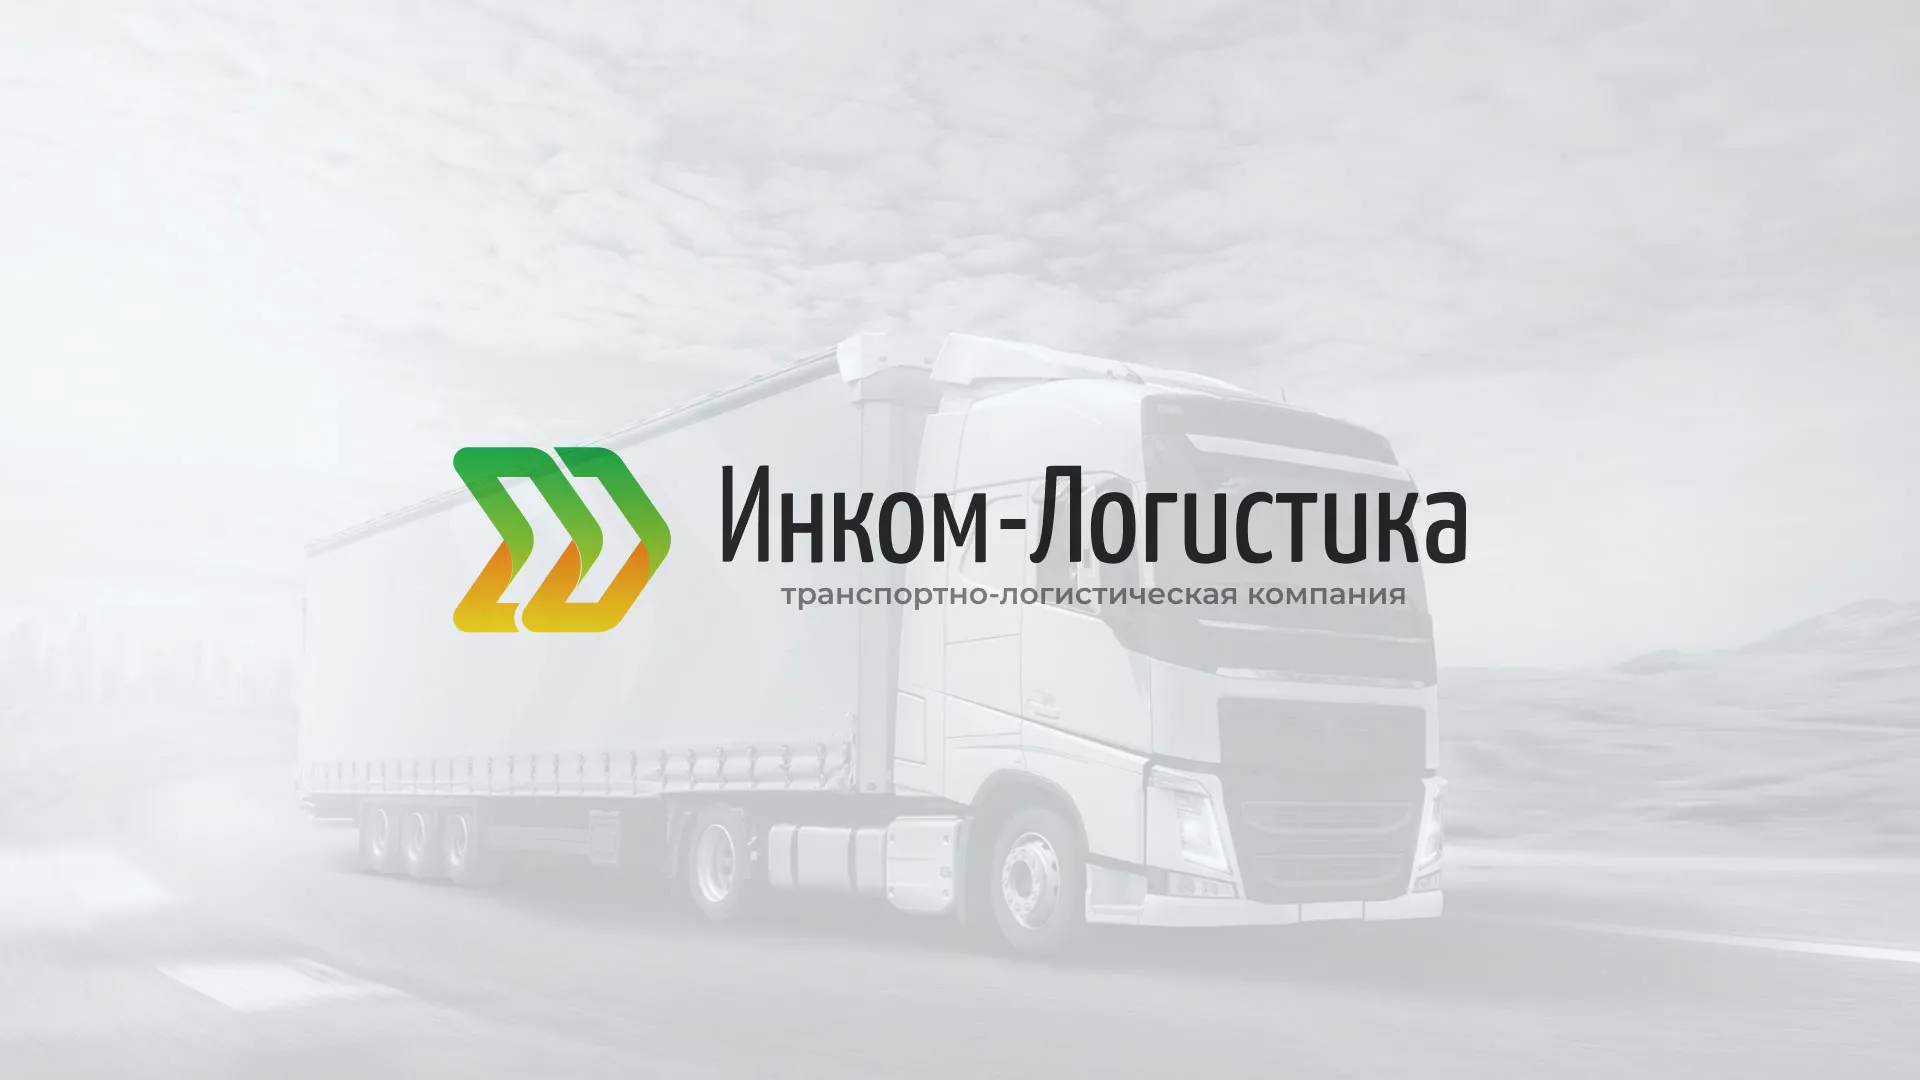 Разработка логотипа и сайта компании «Инком-Логистика» в Хотьково